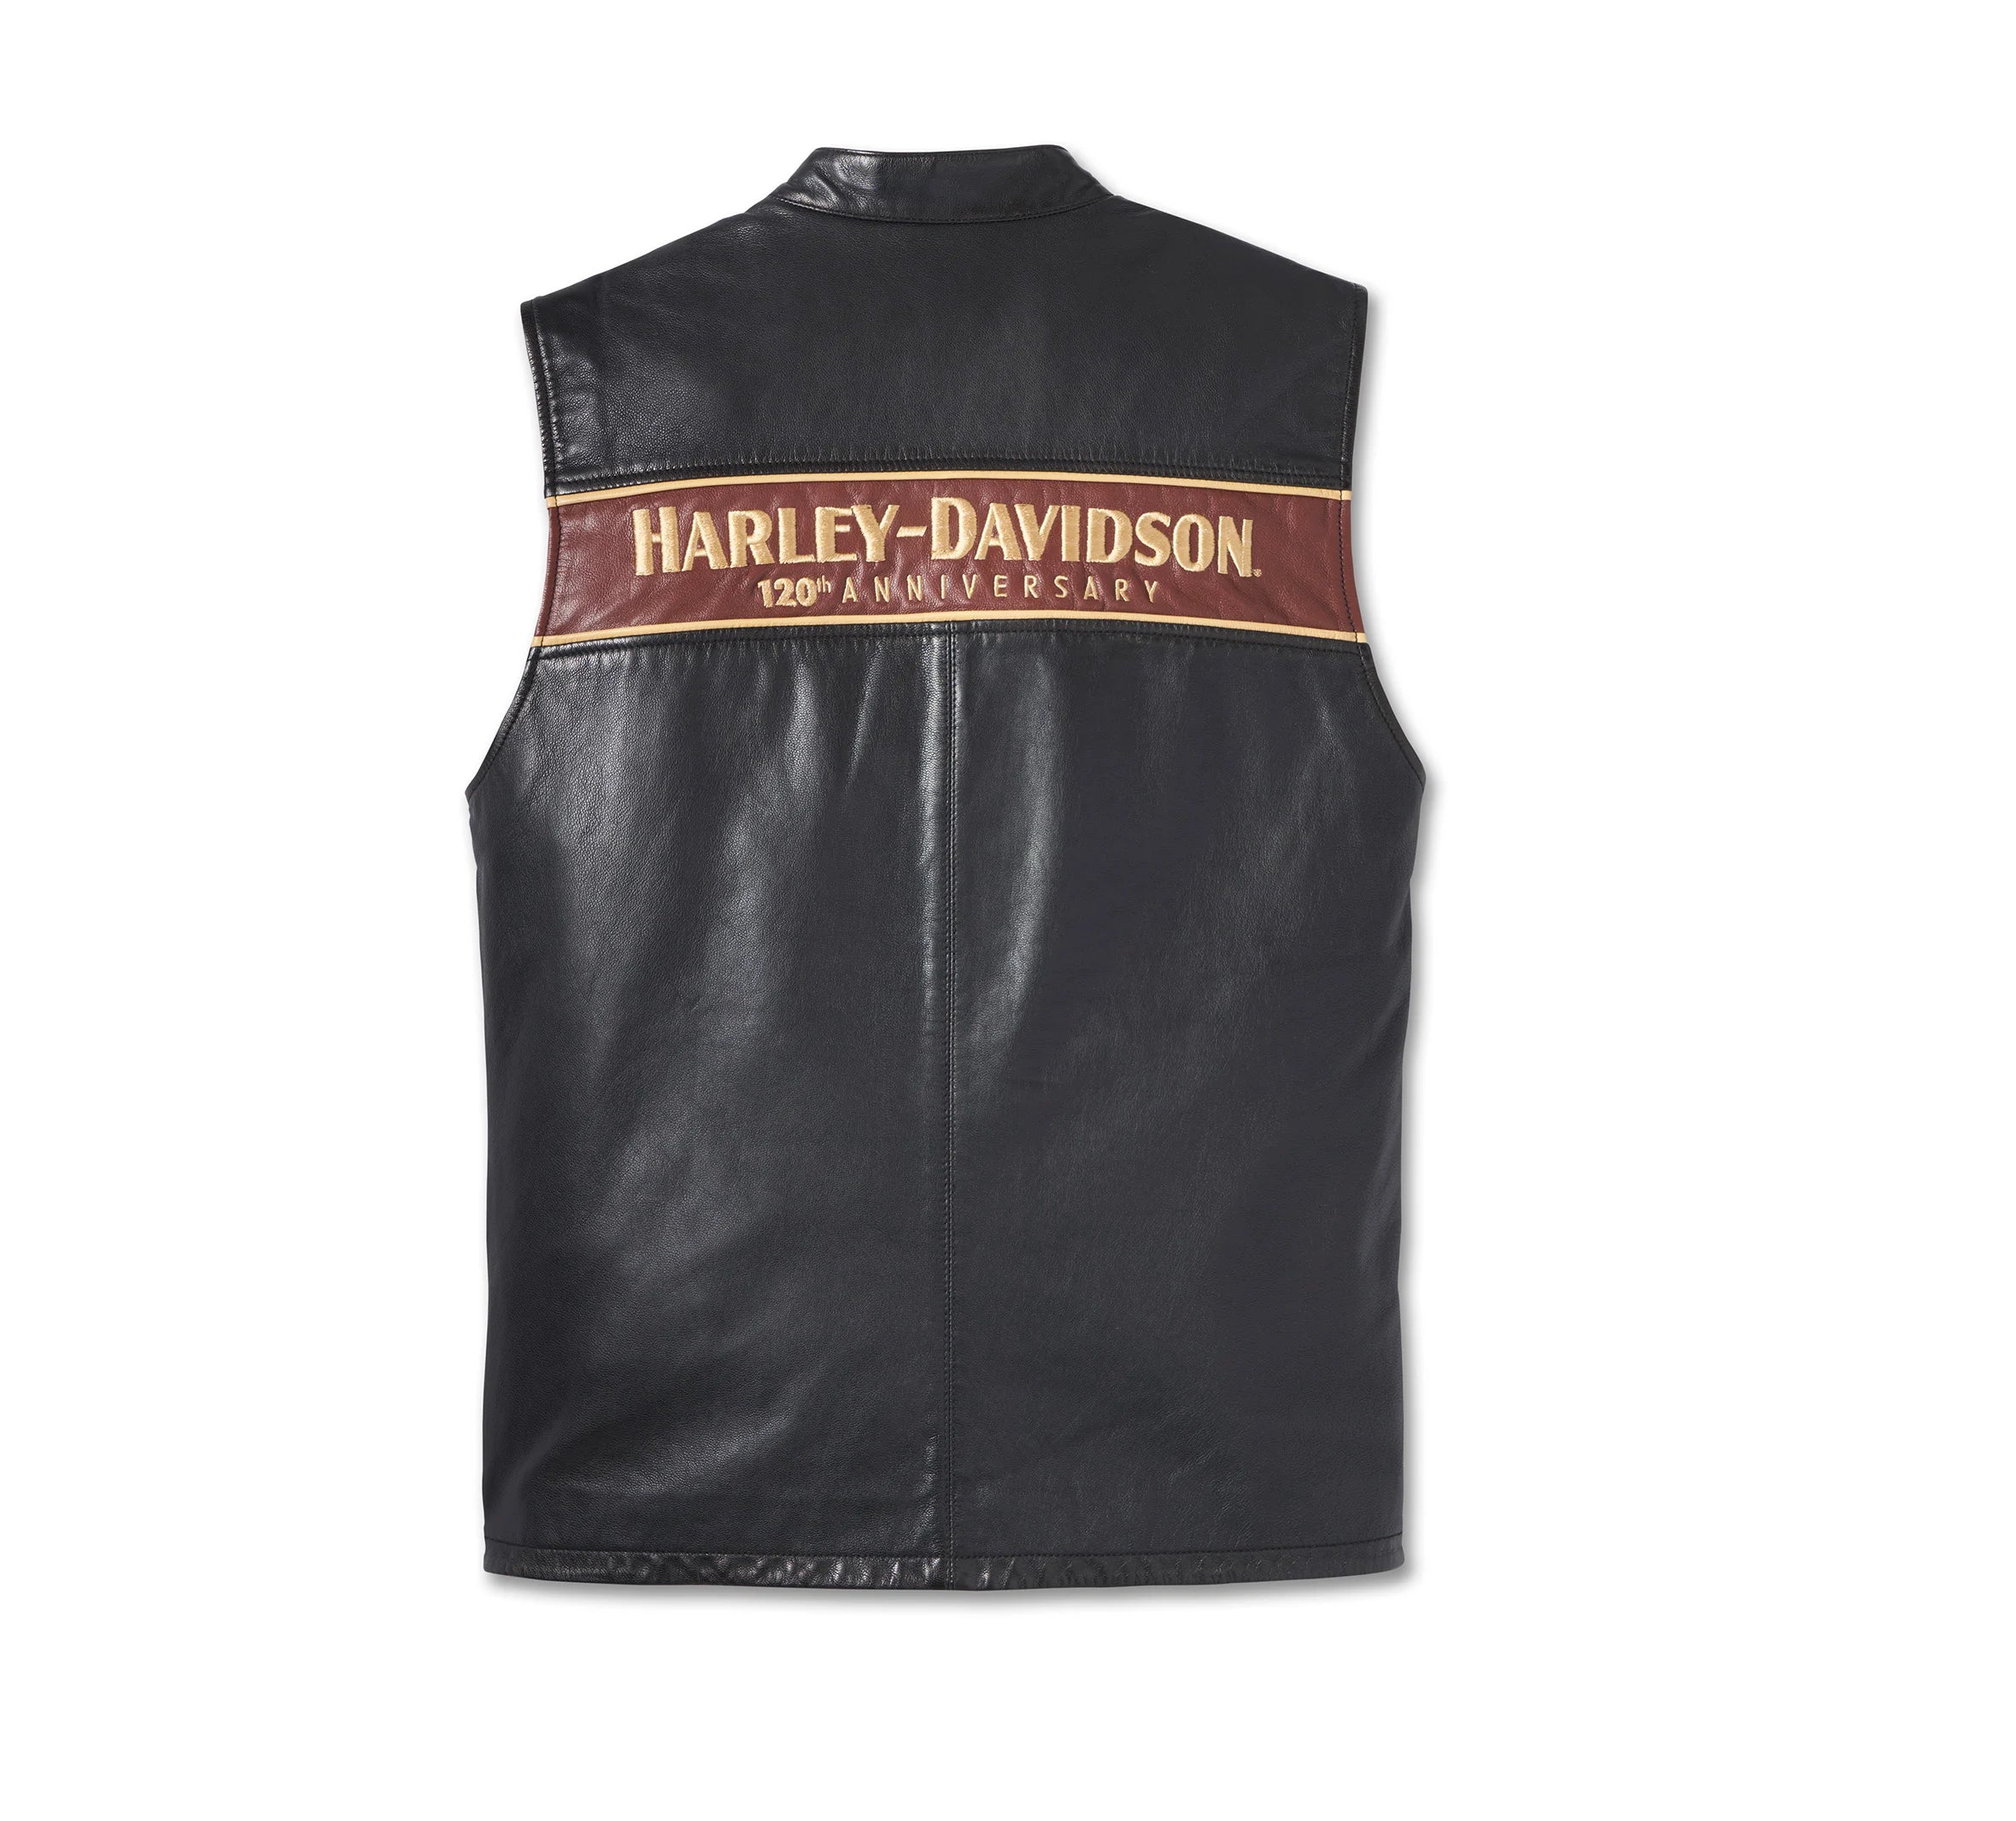 Genuine-Harley-Davidson-Leather-Vest-120th-Anniversary-Back